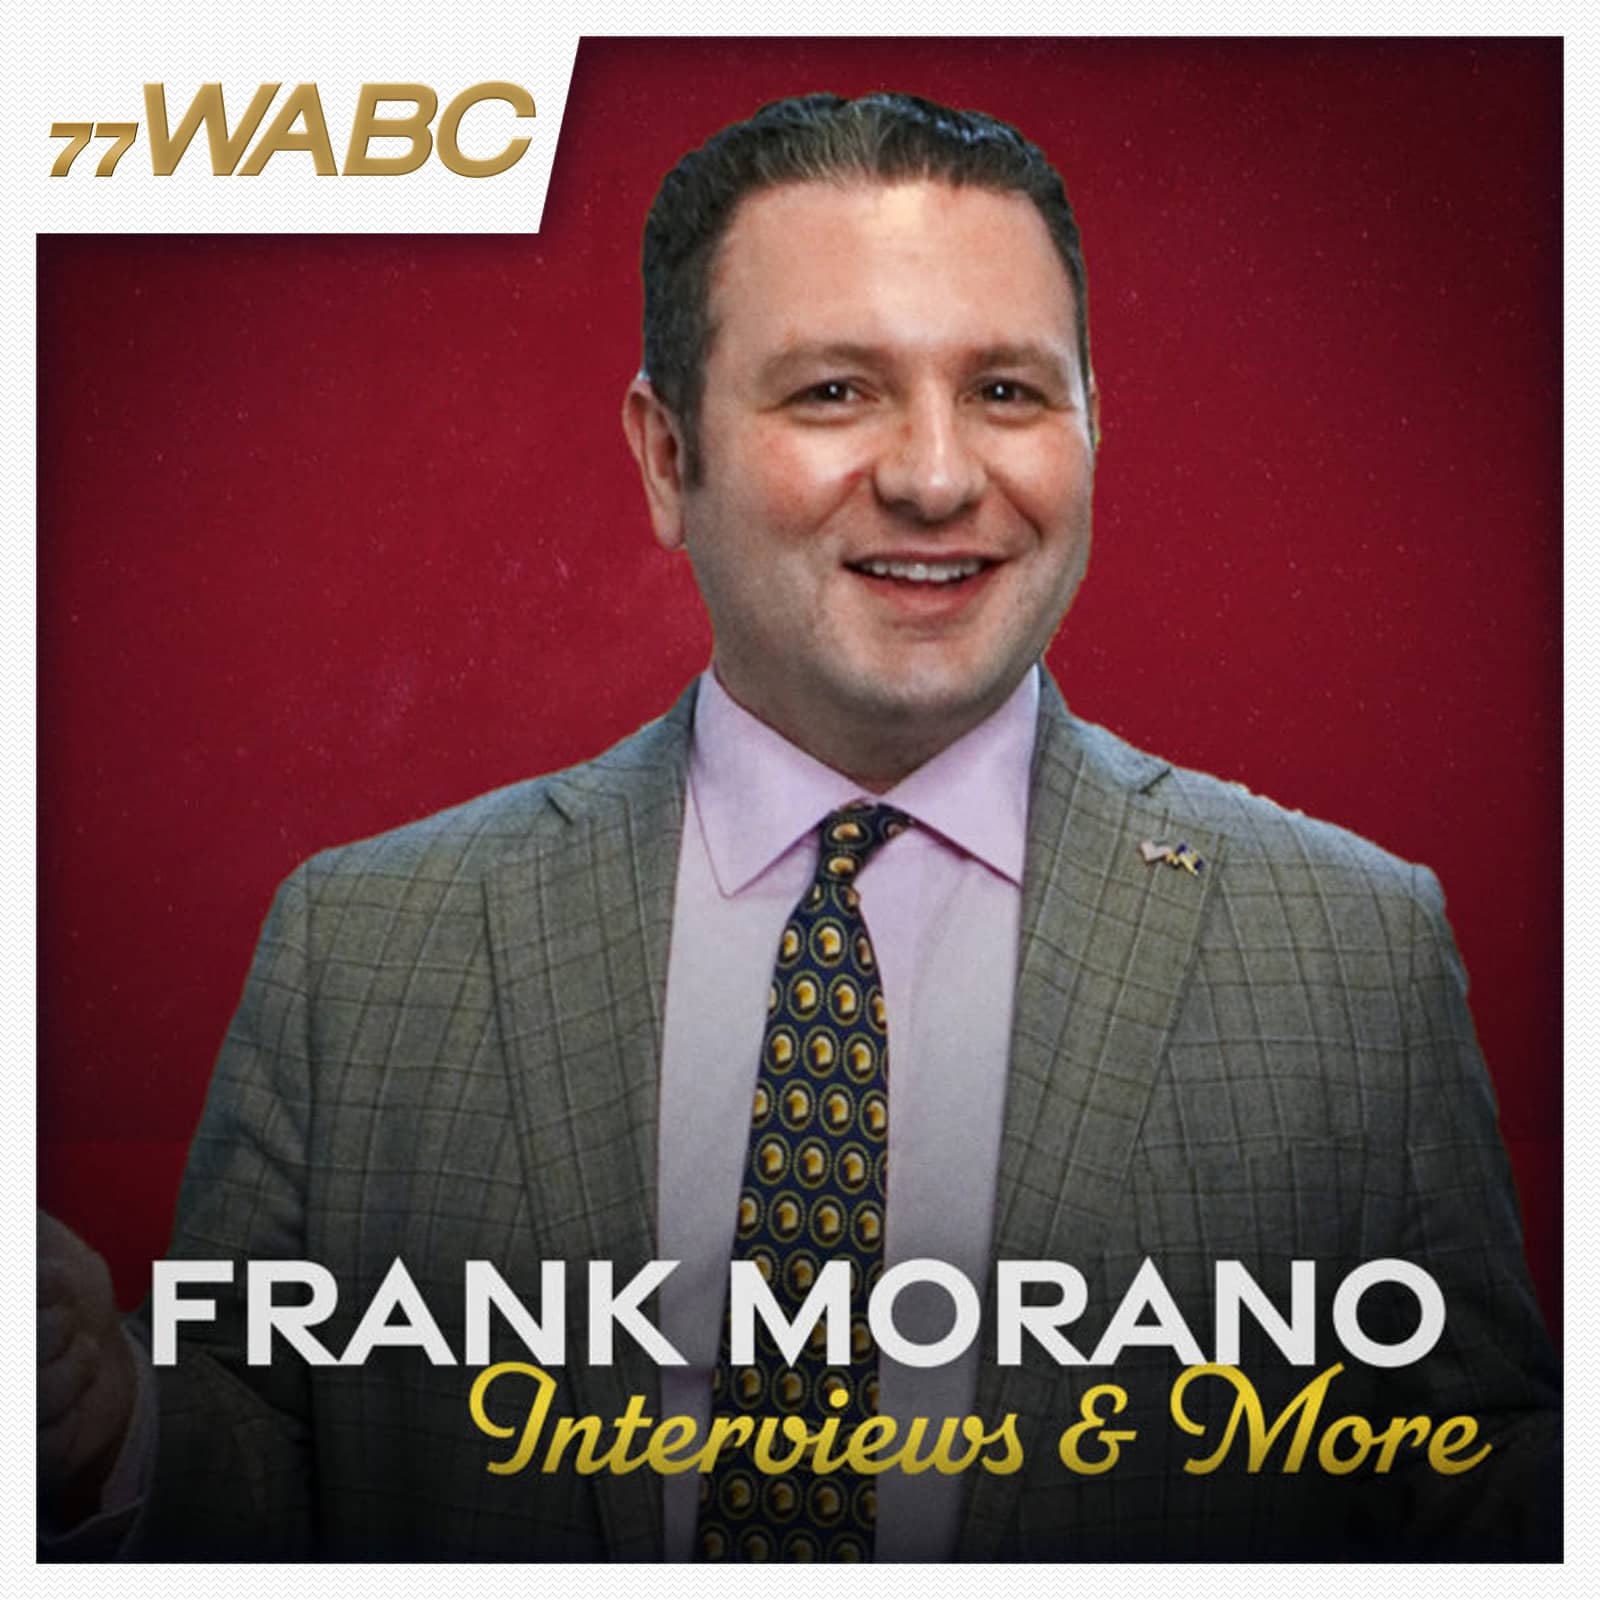 frank-morano-interviews-and-more-podcast-new-logo-312